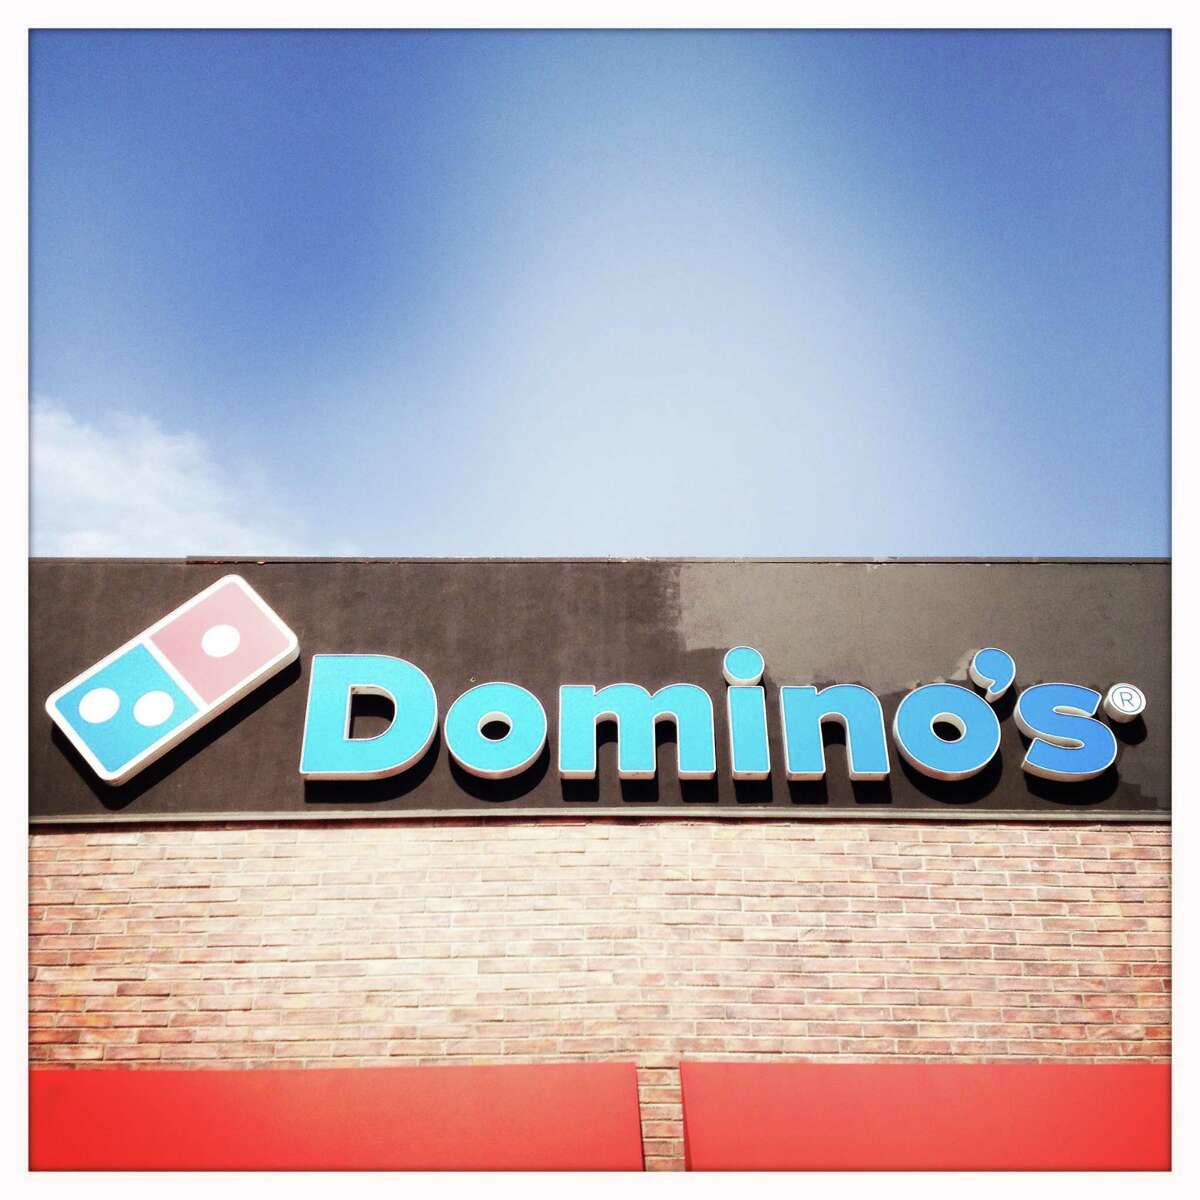 Domino's Pizza storefront.